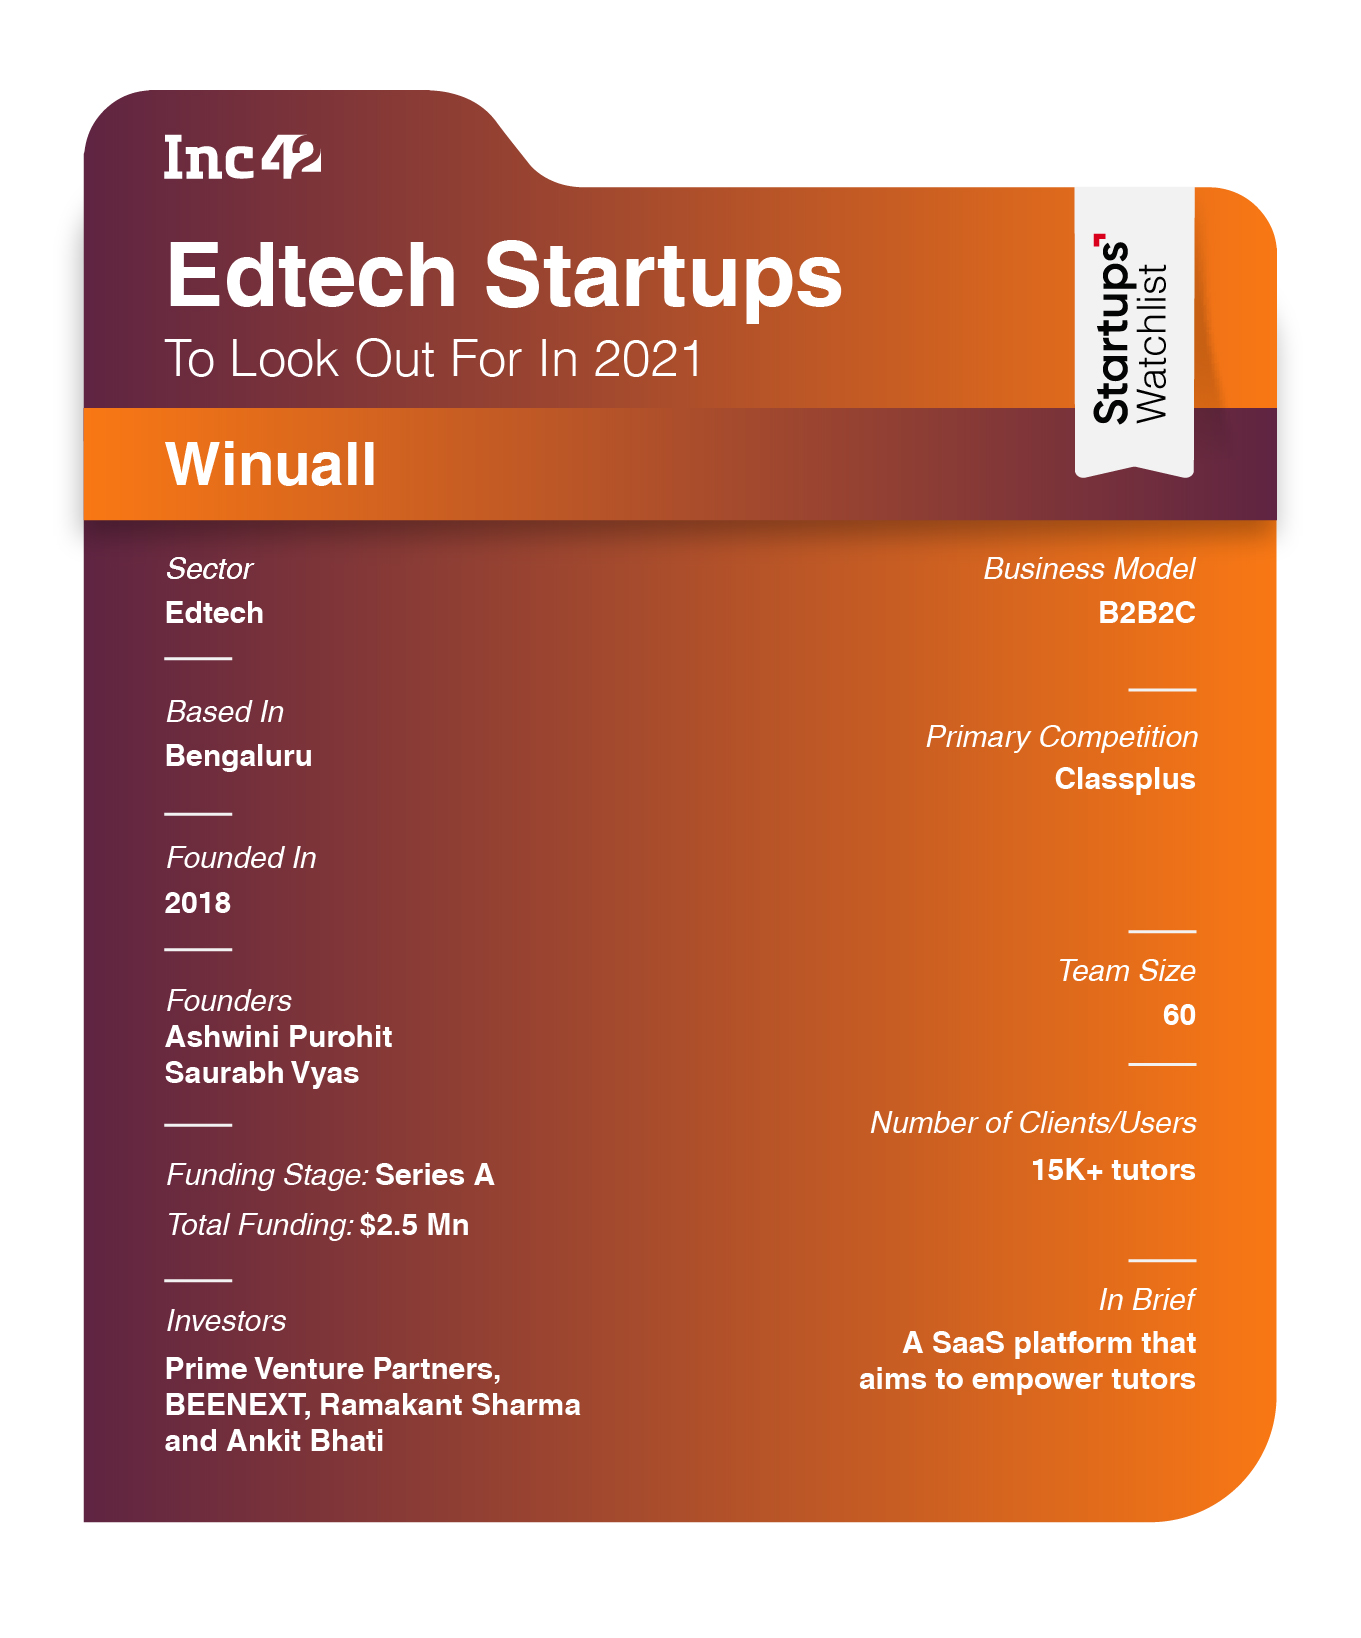 edtech startups in 2021